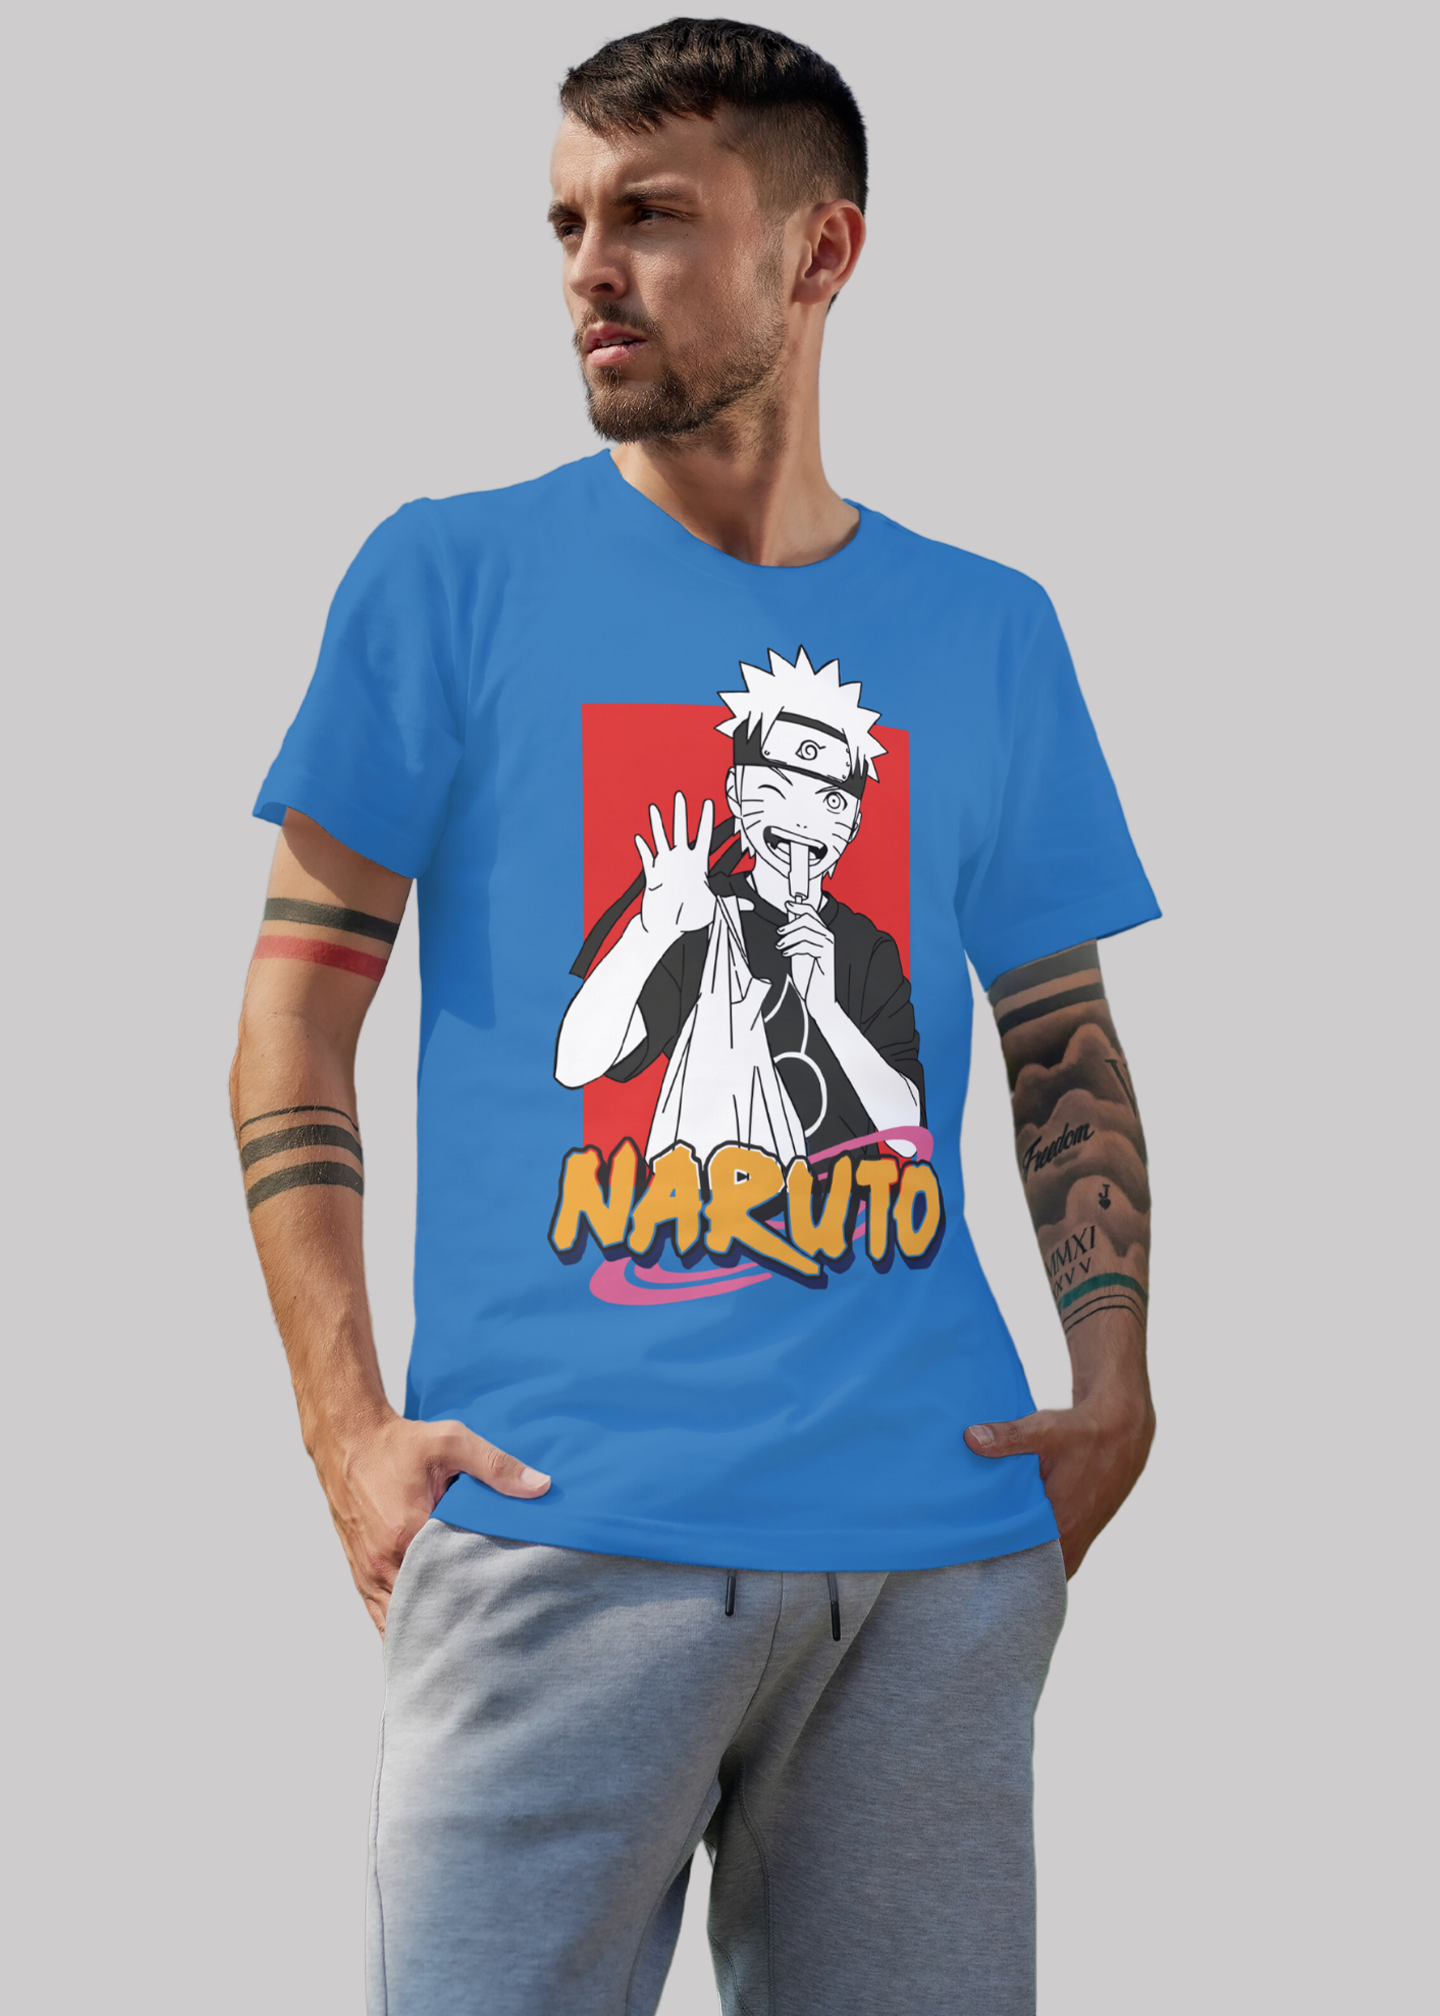 Naruto 1 Printed Half Sleeve Premium Cotton T-shirt For Men